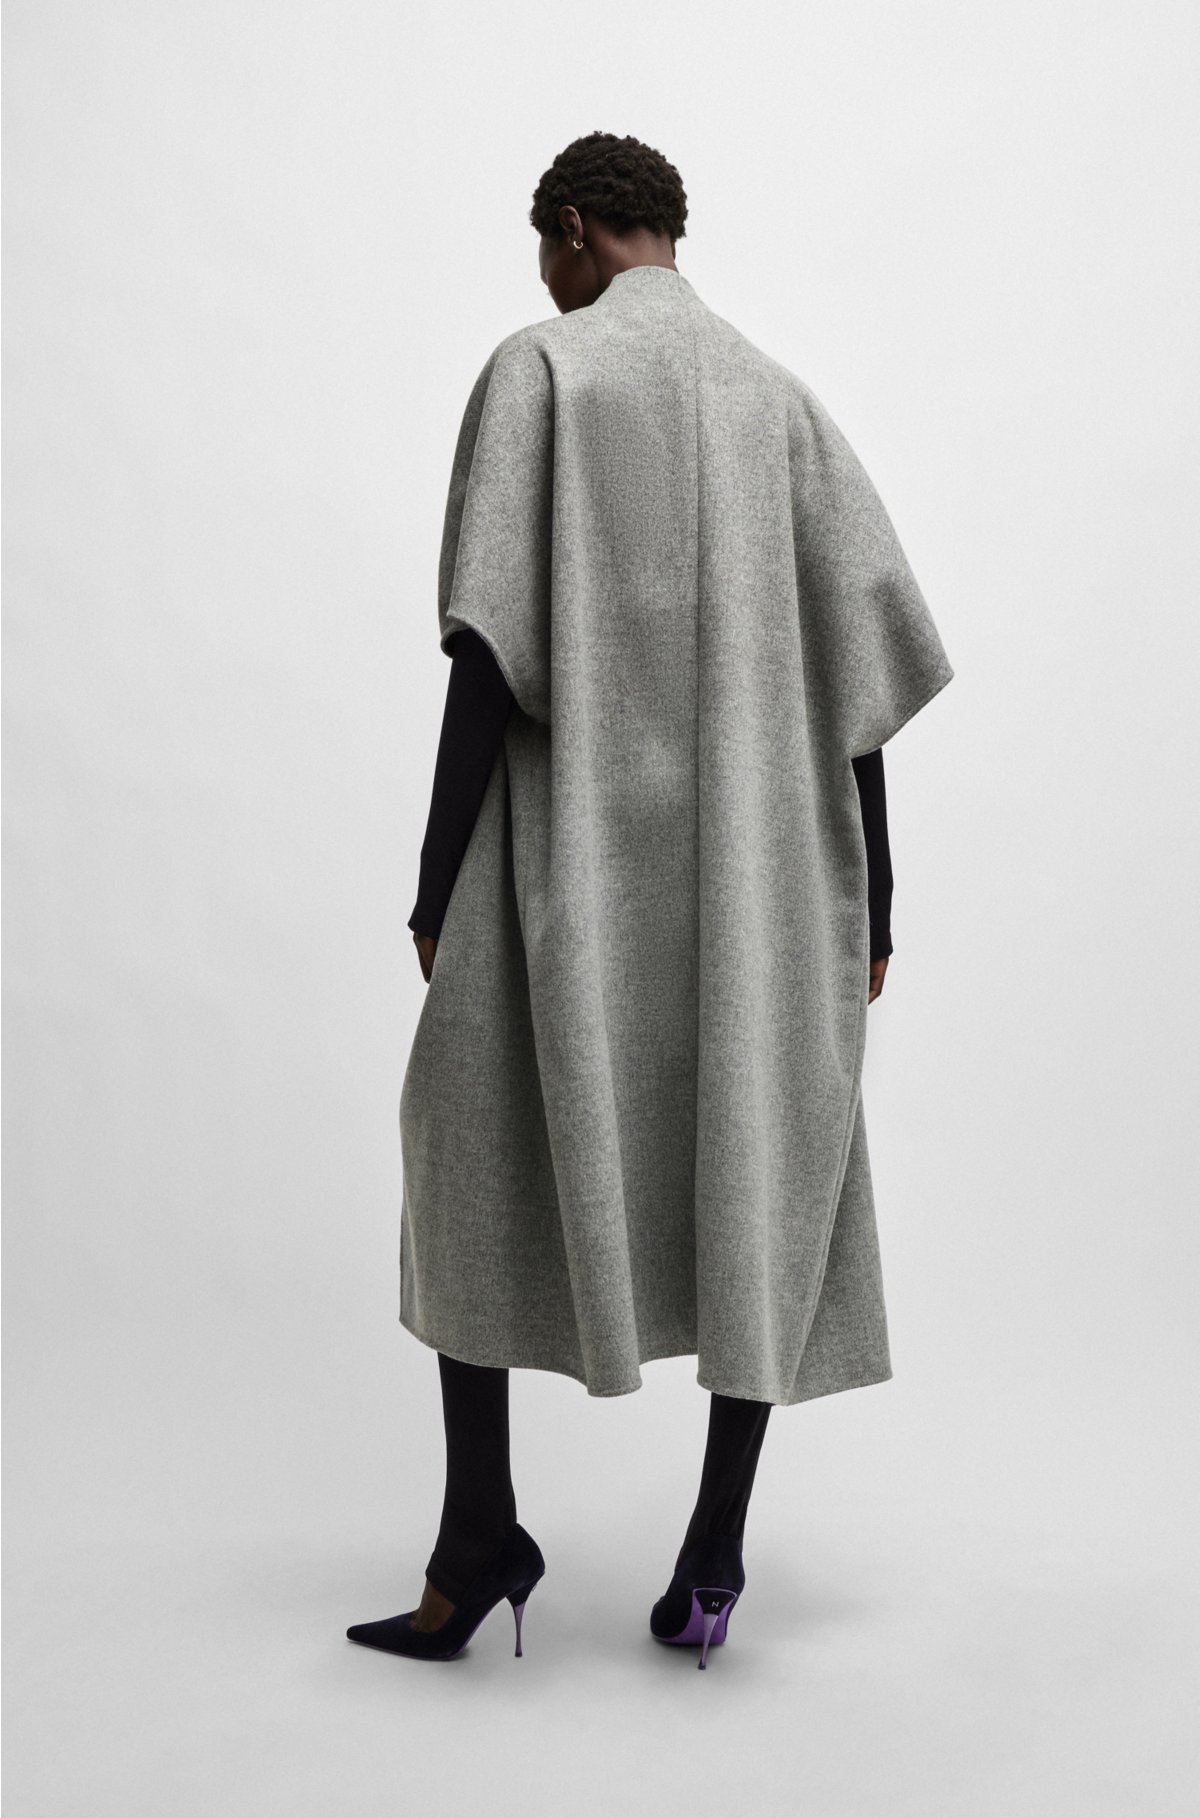 NAOMI x BOSS waterfall-front cape coat in virgin wool, Light Grey